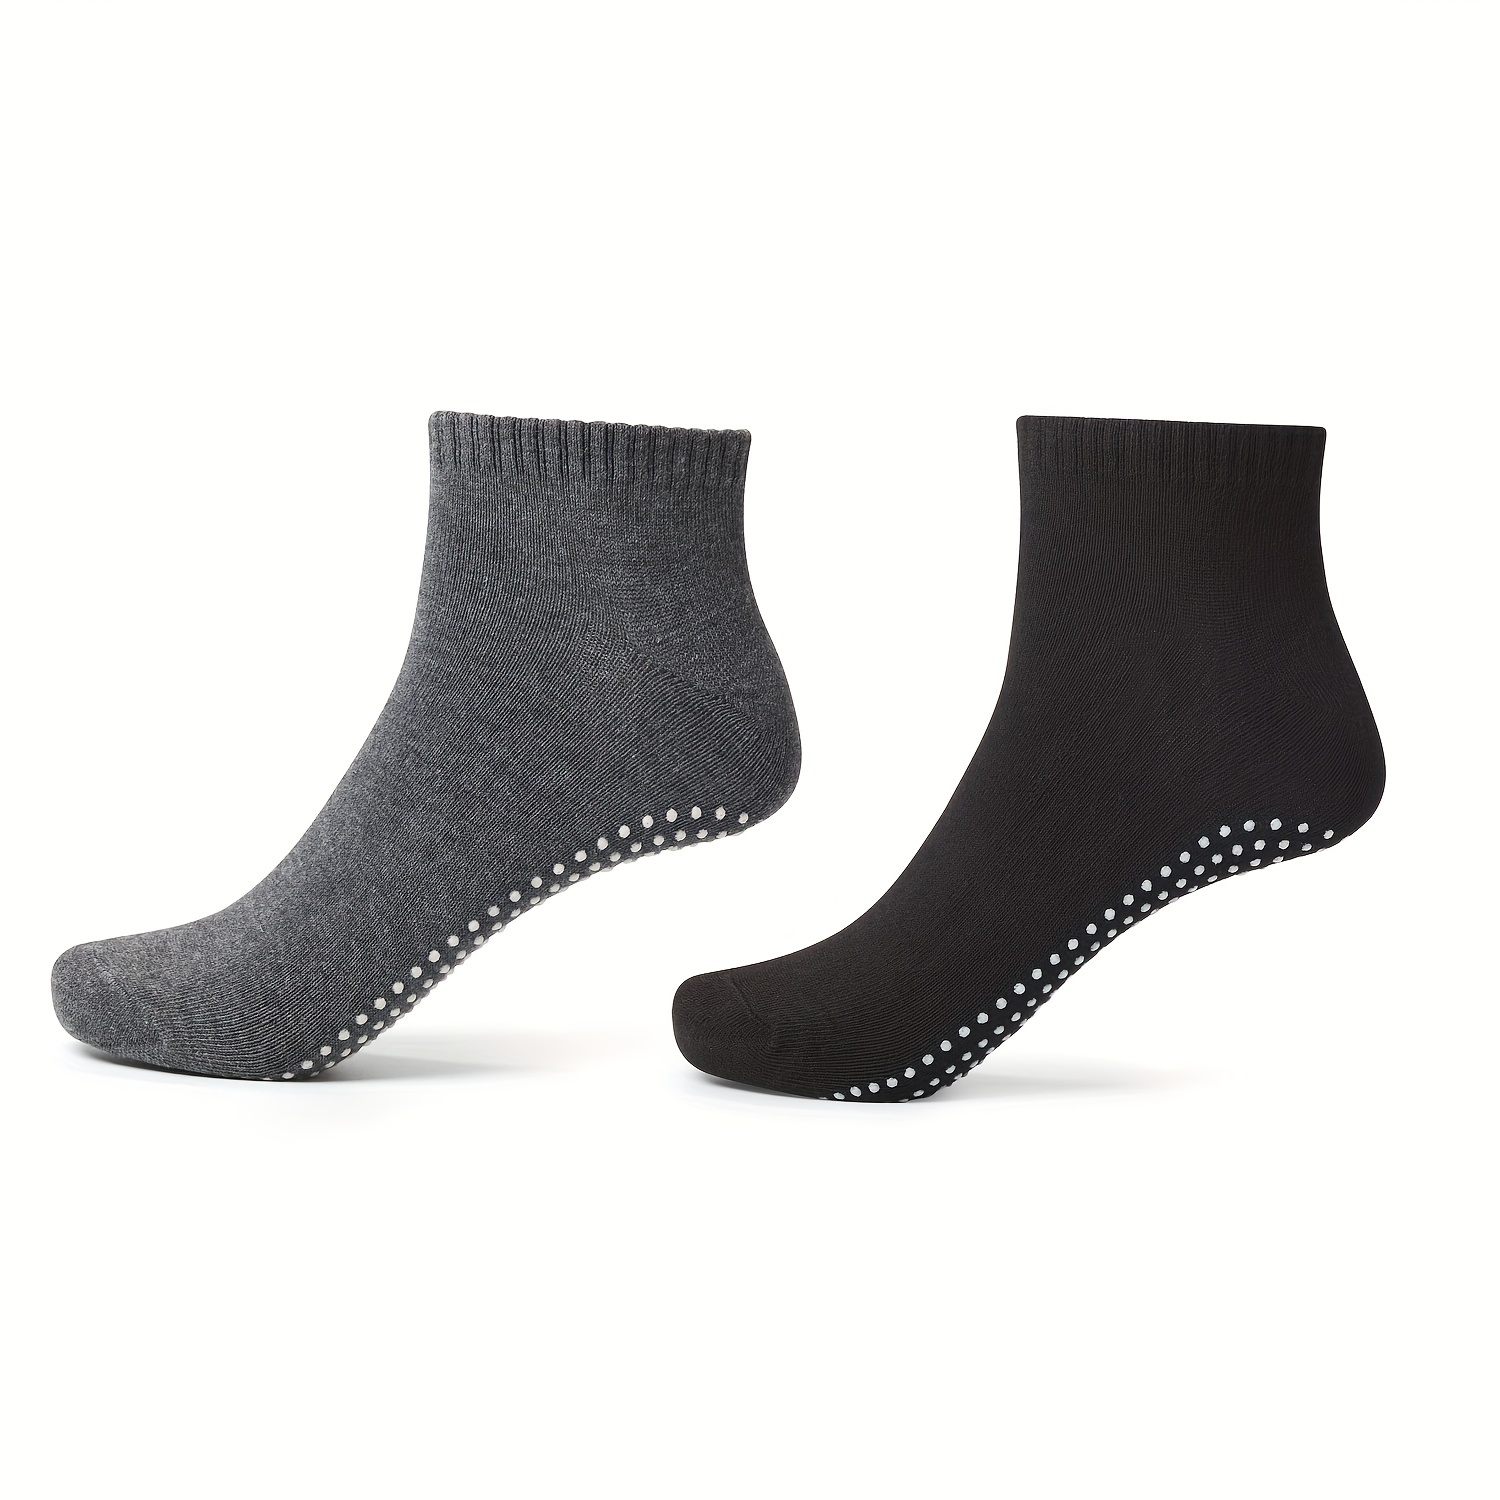 Women And Man Anti-Skid Socks with Grips Yoga Sock Non Slip Ankle Grip Socks